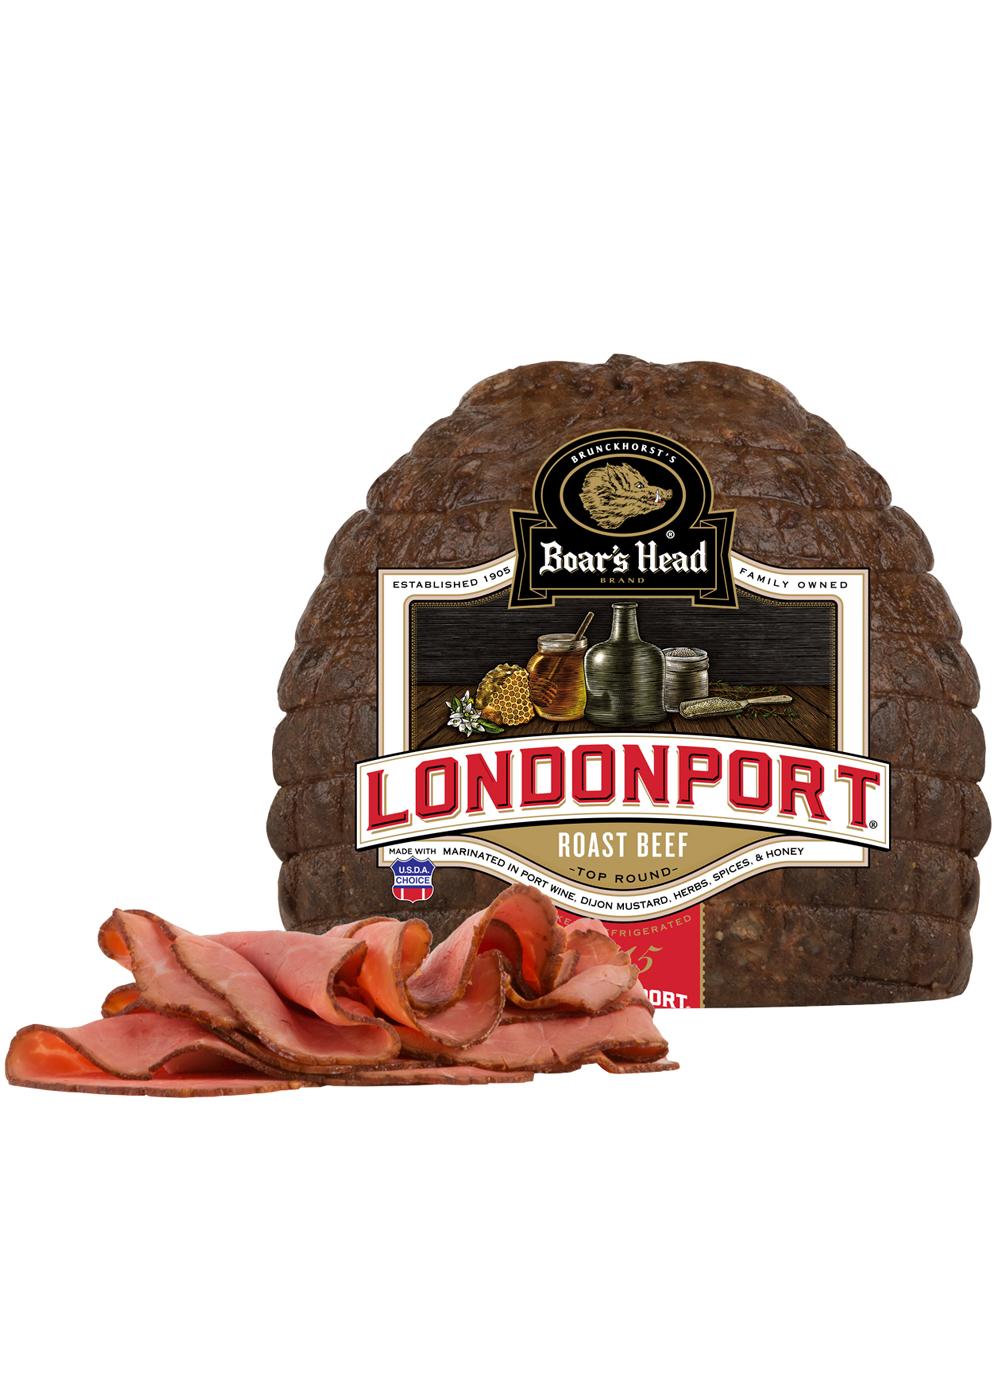 Boar's Head Londonport Top Round Roast Beef, Custom Sliced; image 2 of 2